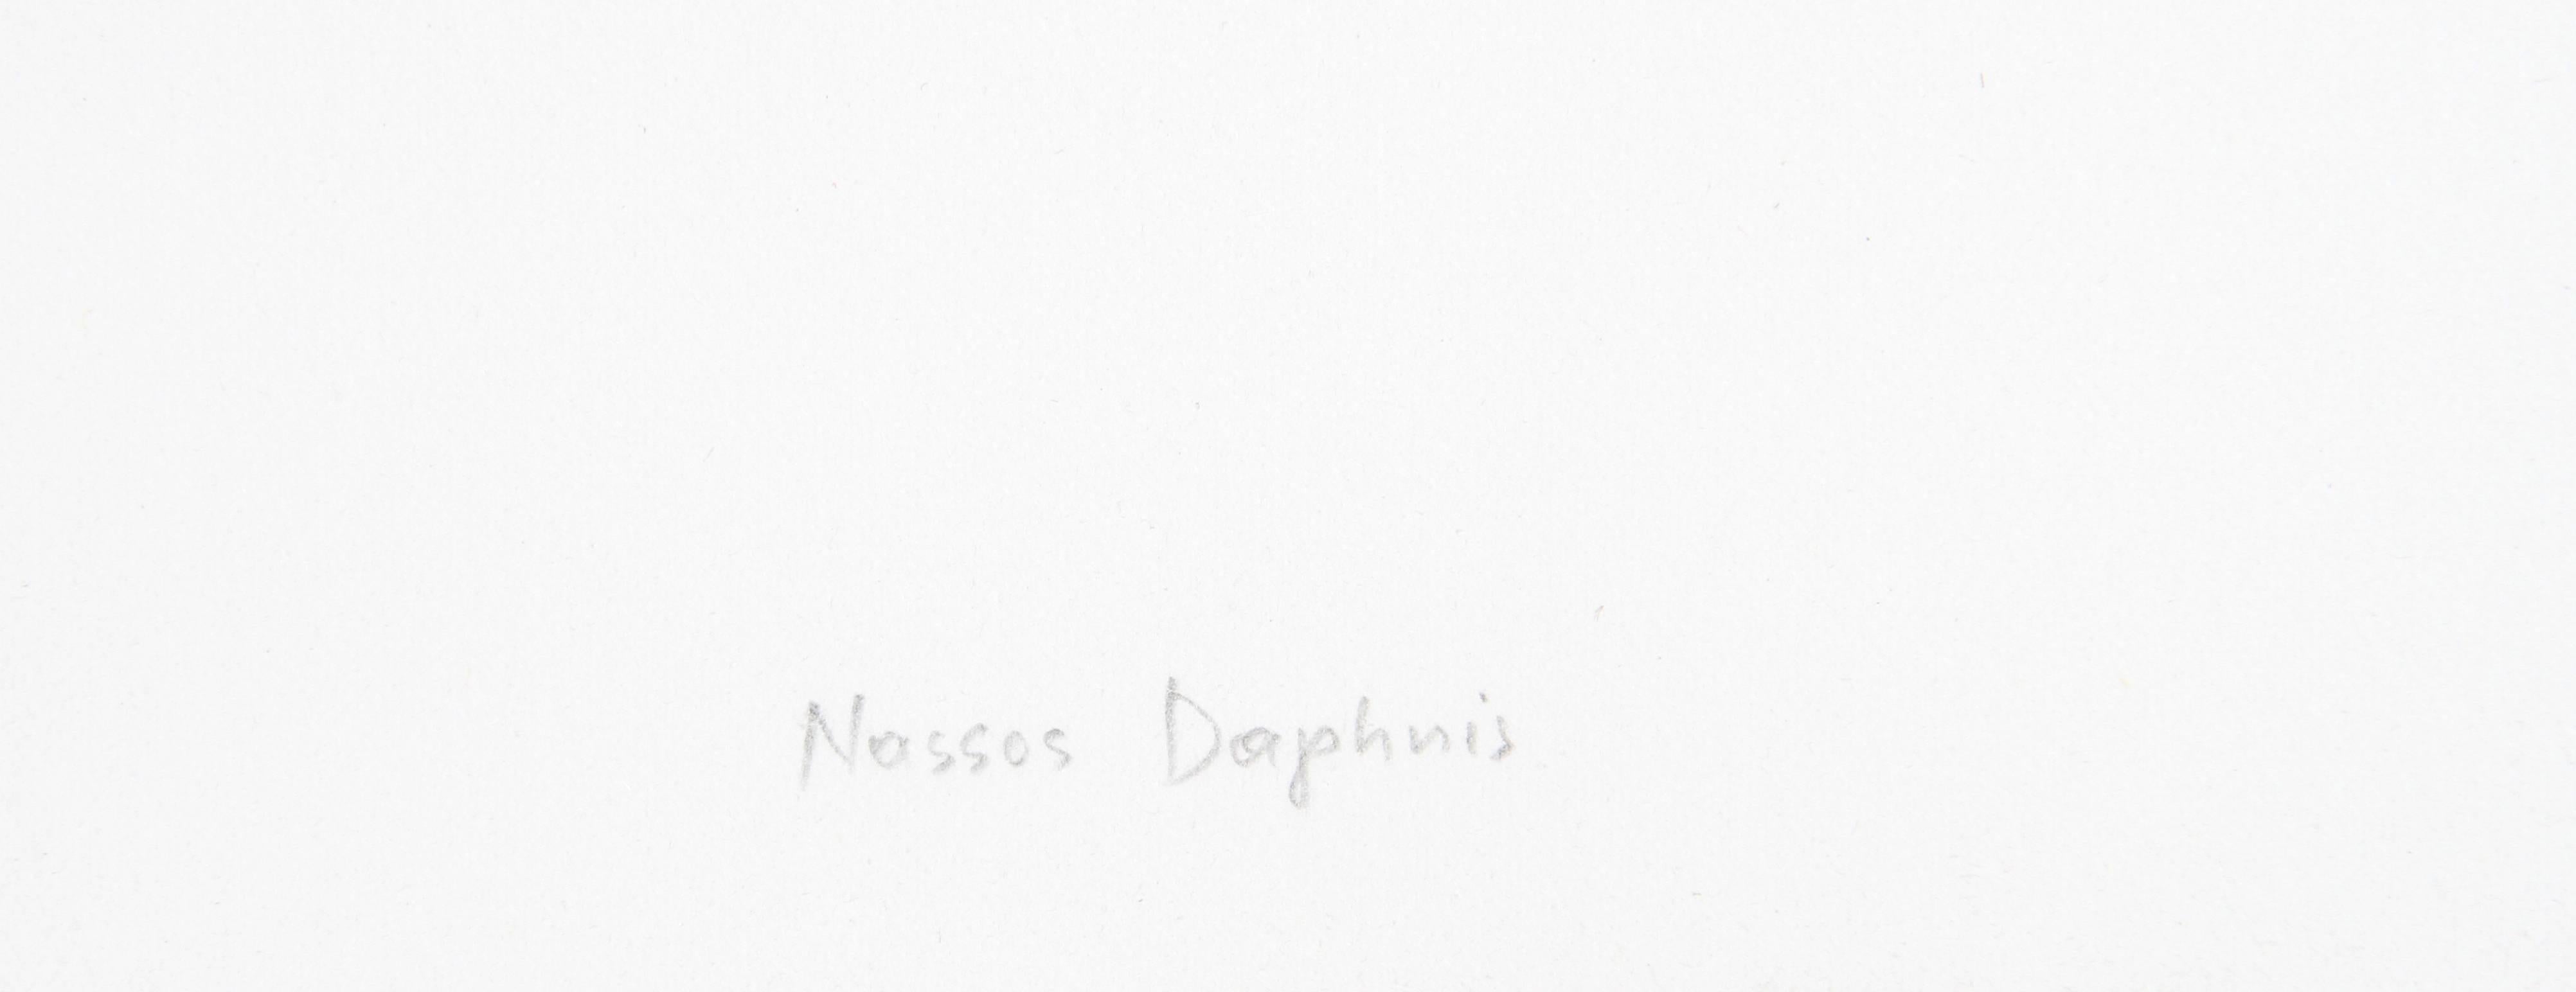 29-E-78, Geometric Abstract by Nassos Daphnis 1